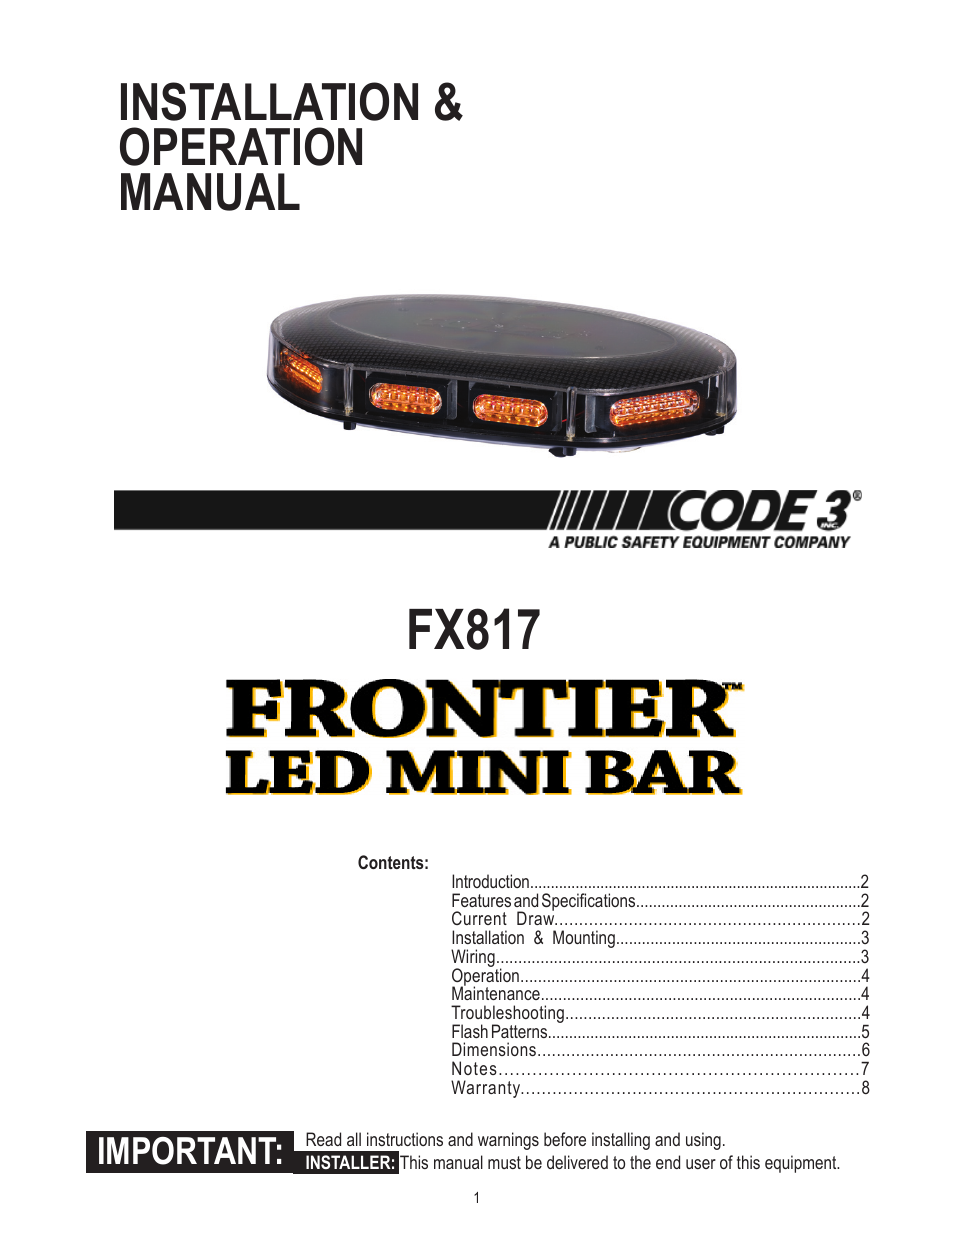 Frontier LED Mini Bar